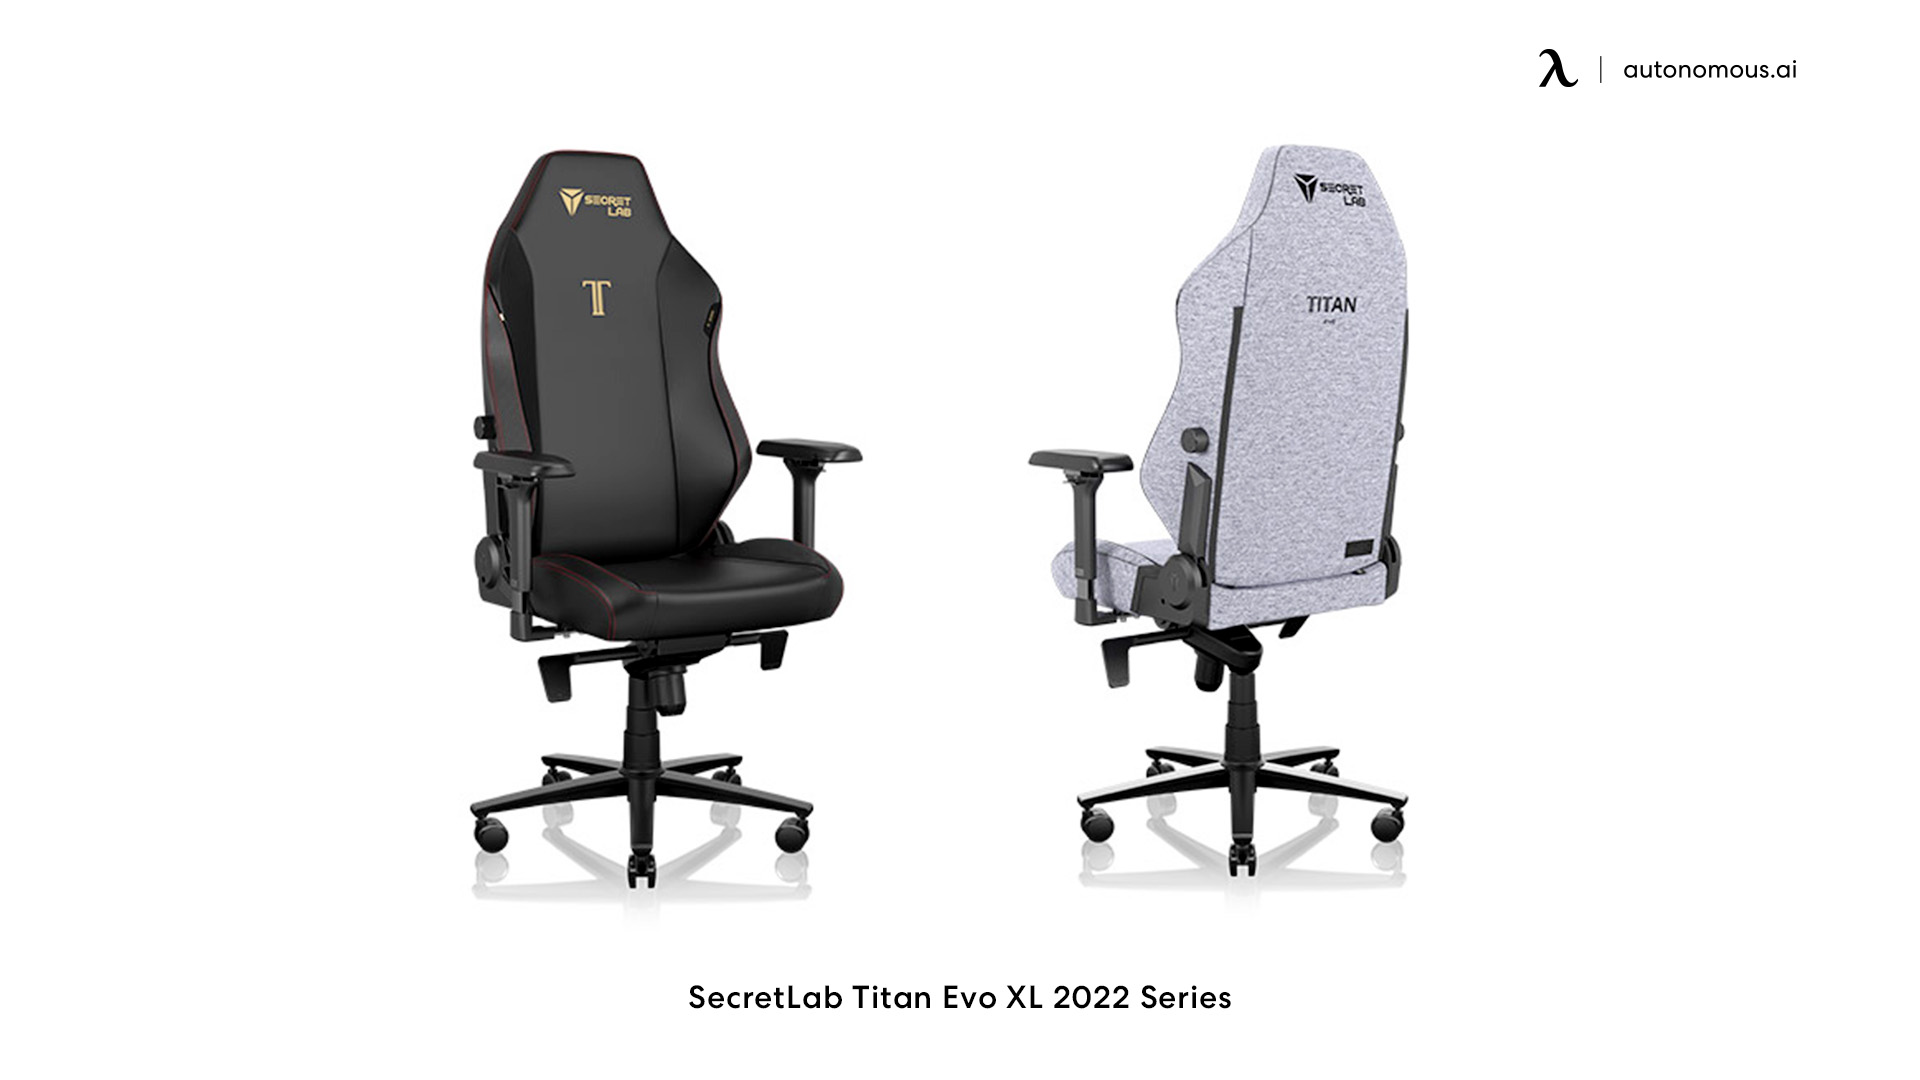 SecretLab Titan Evo XL 2022 Series